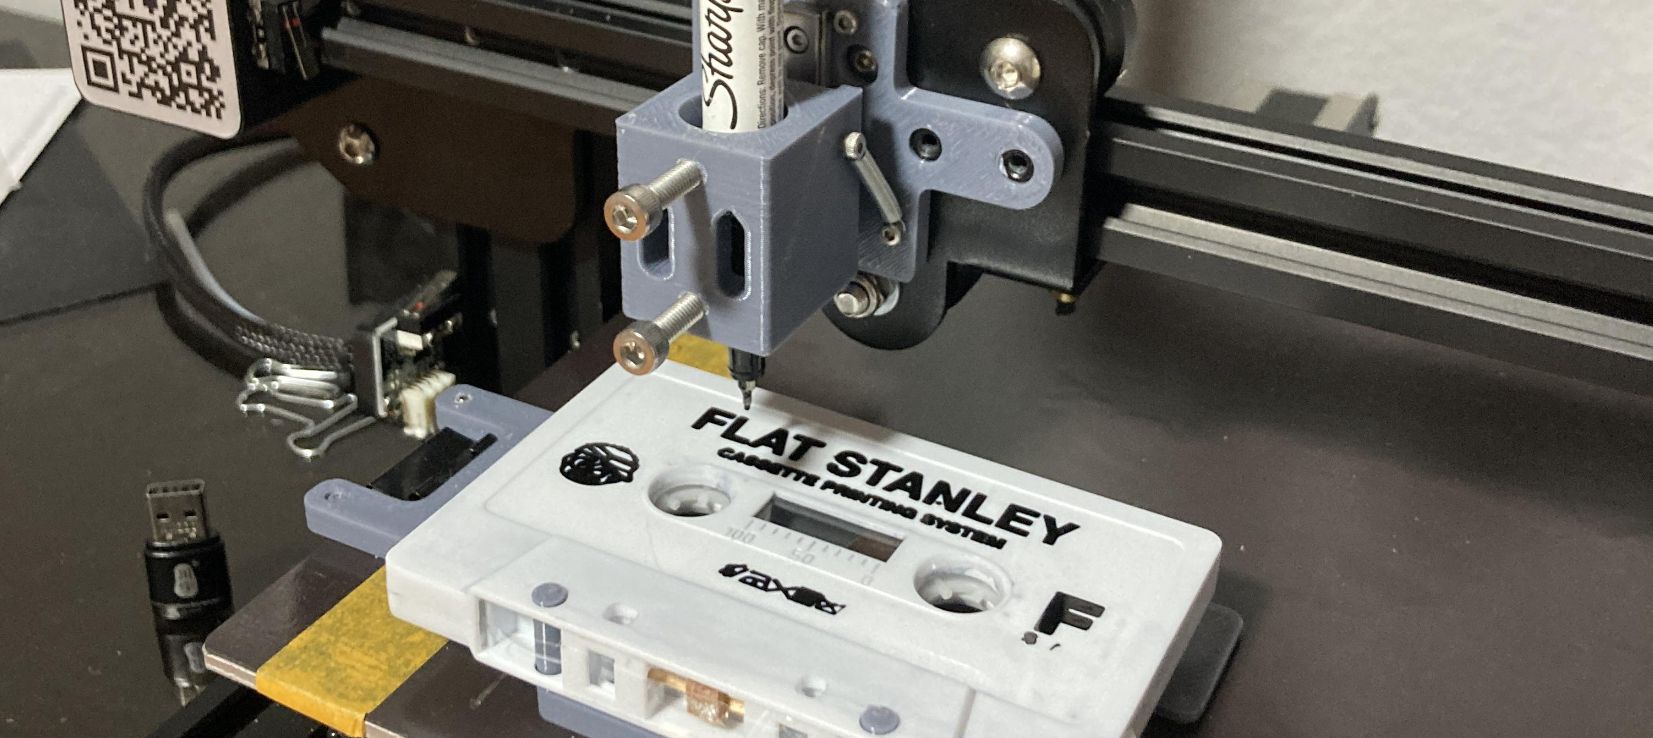 Ender 3 Plotter Attachment For Printing Onto Cassettes